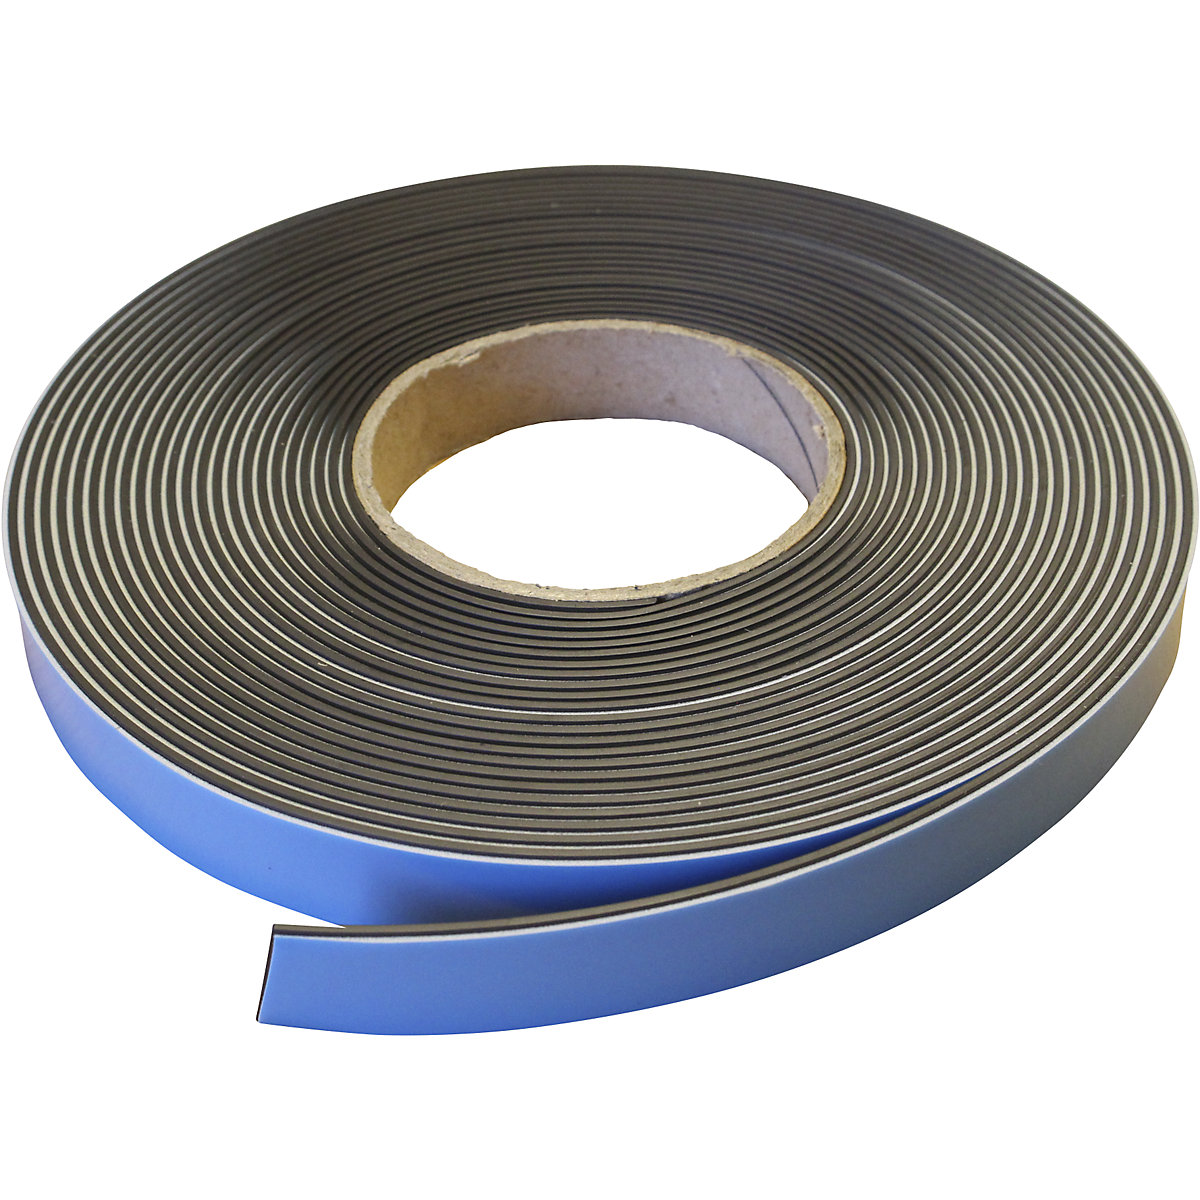 Magnetband, selbstklebend, Stärke 1,5 mm, 1 Rolle, Breite 25 mm-4